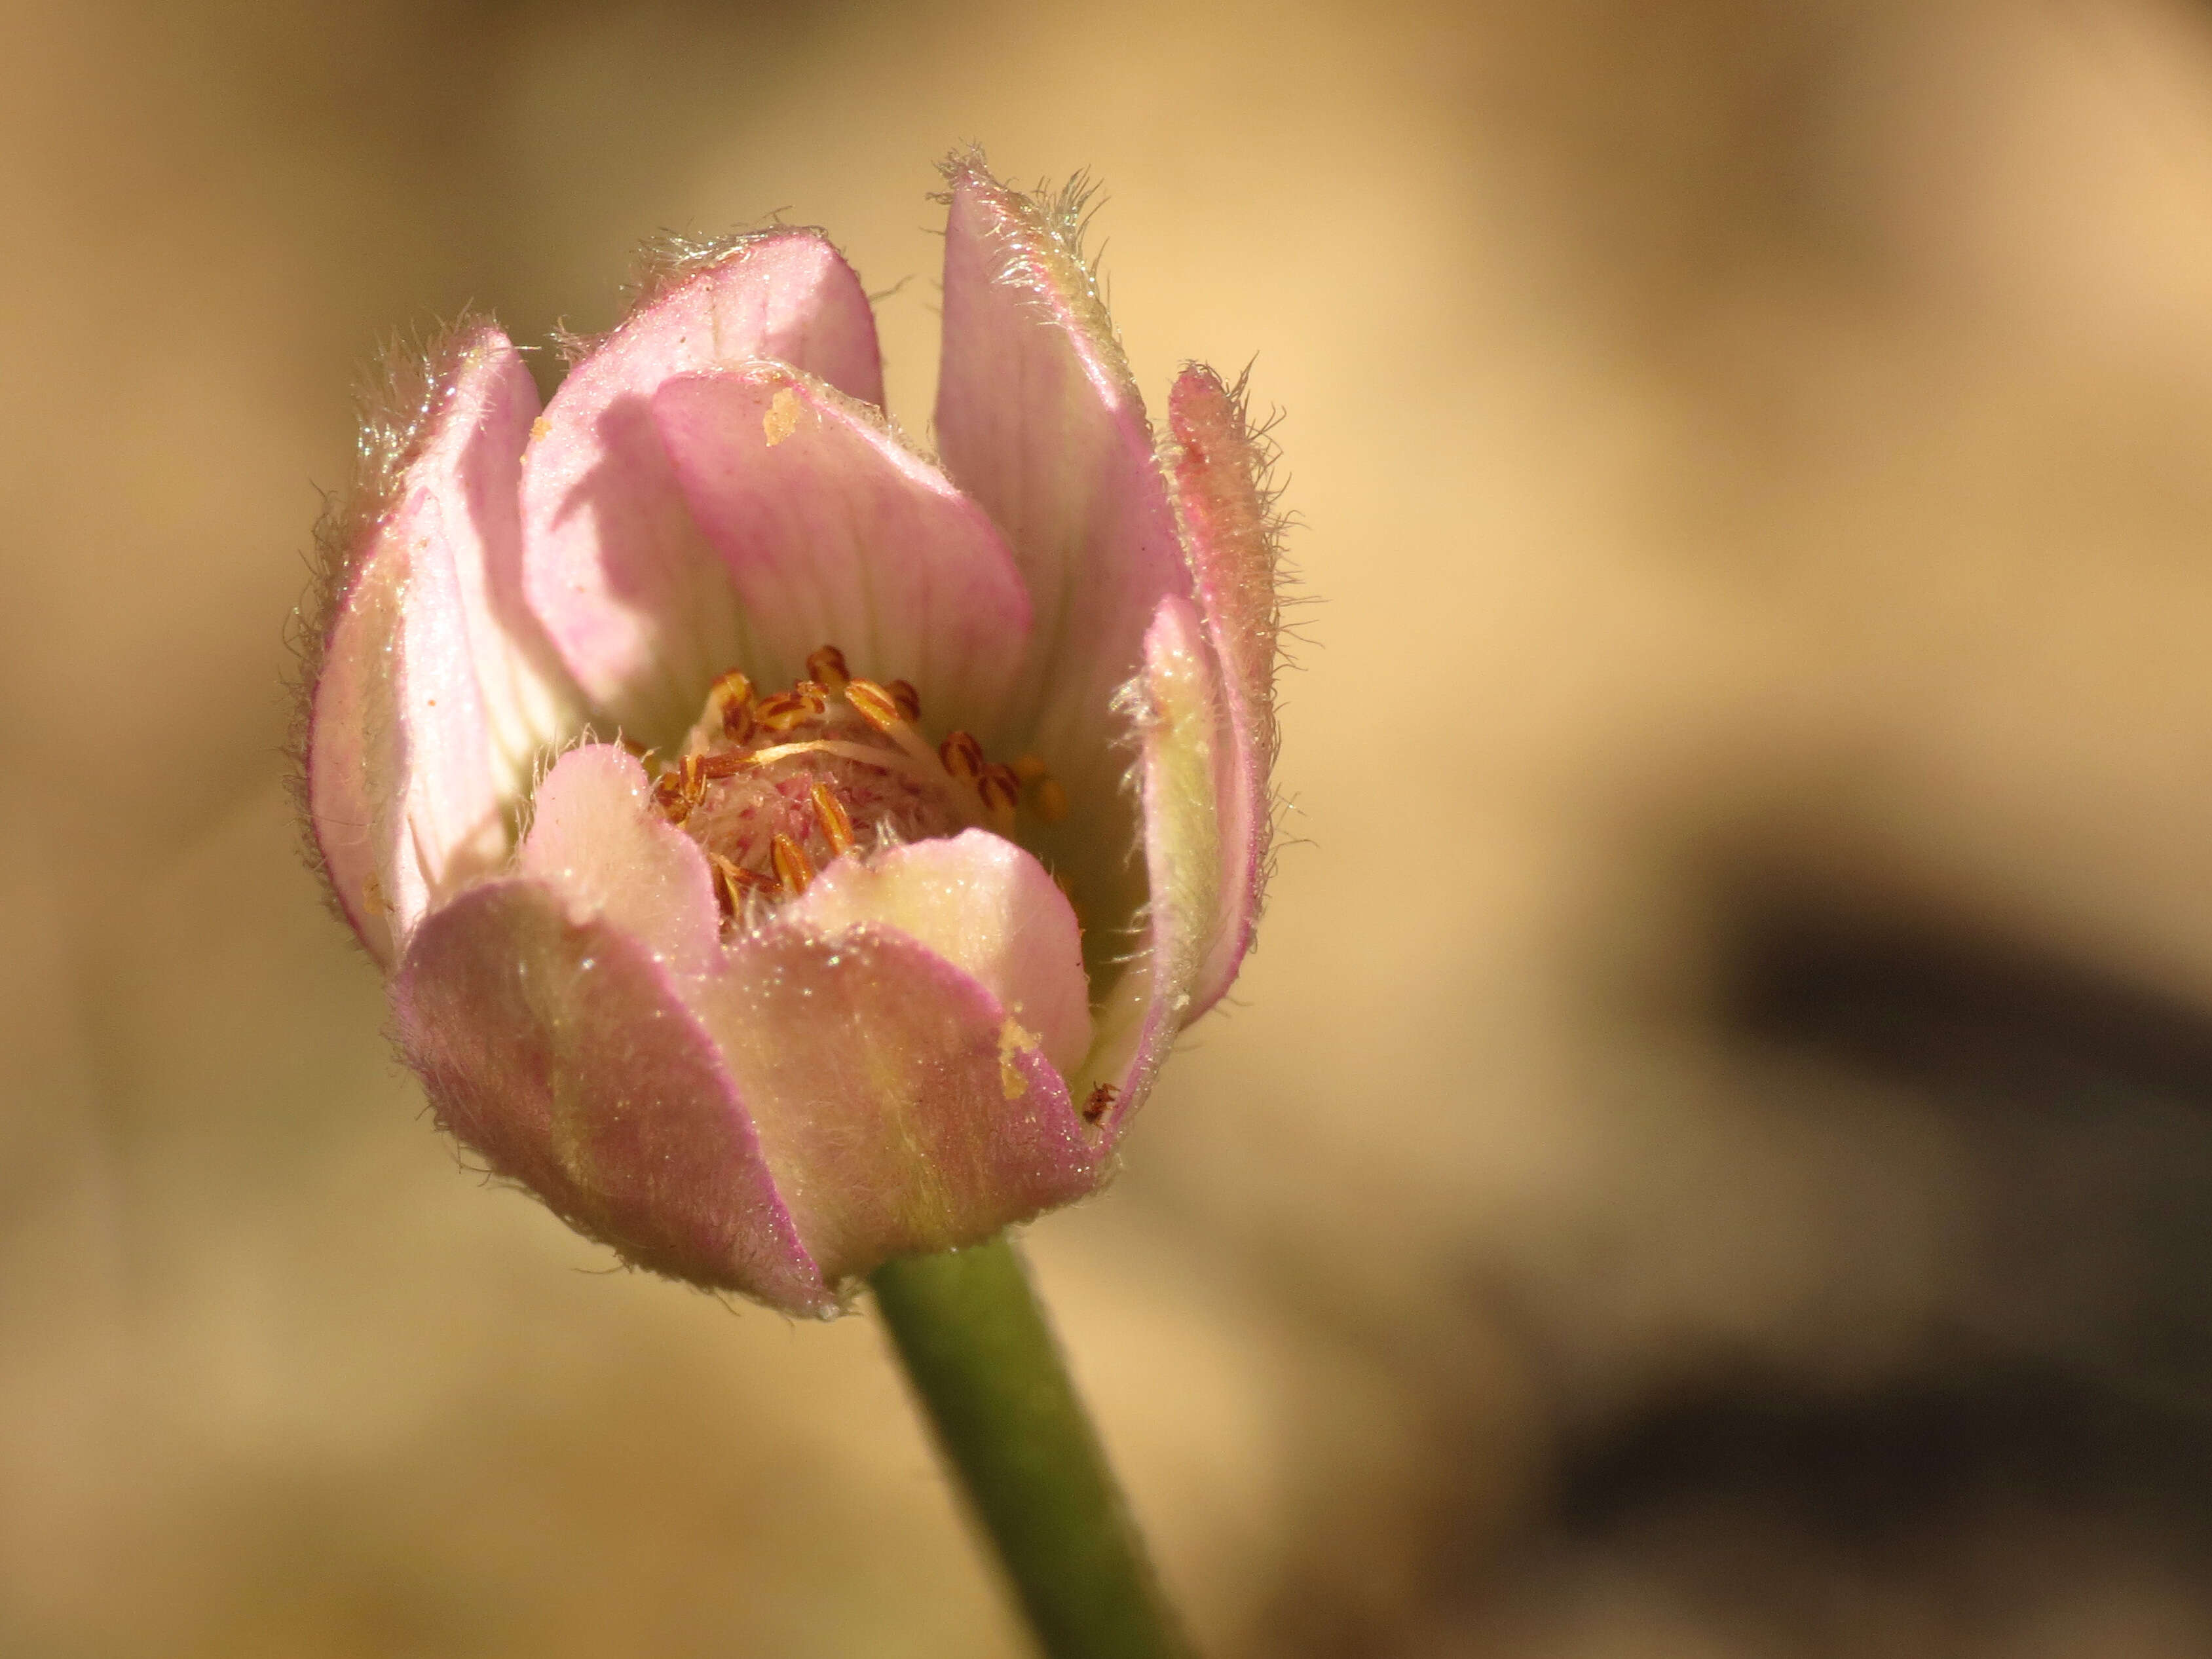 Image of tuber anemone